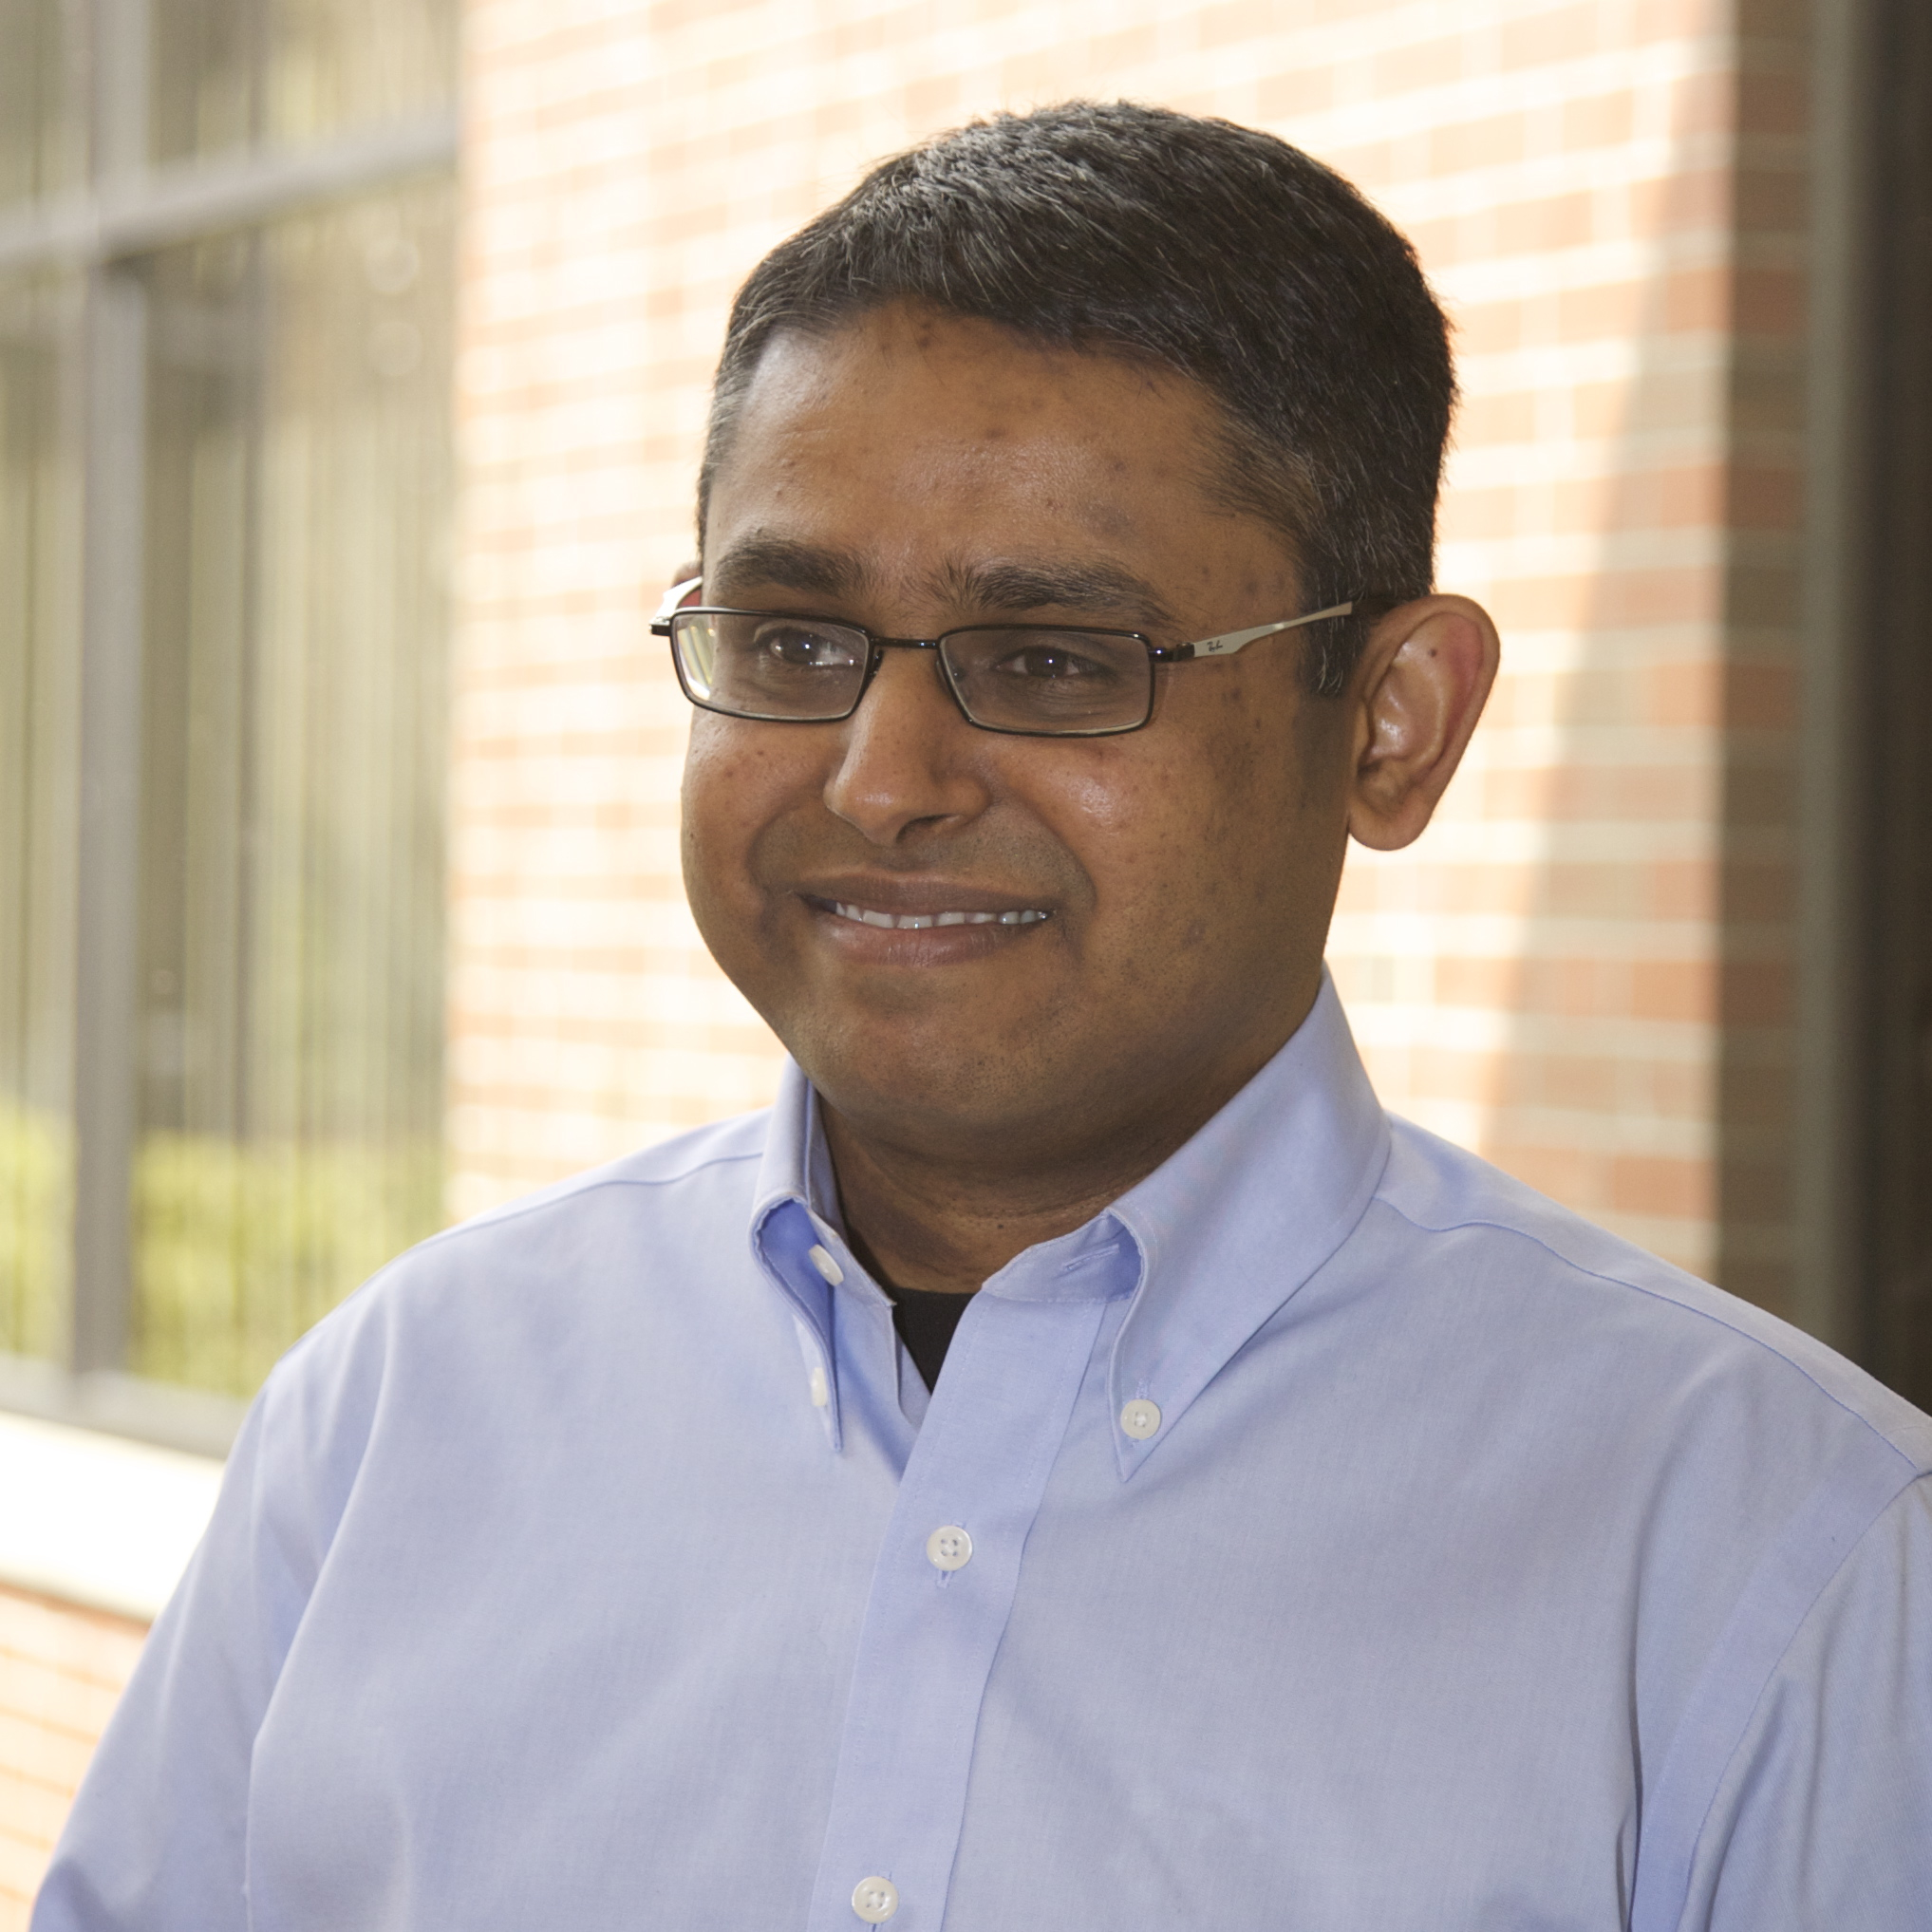 Dr. Mahesh Saptharishi, VideoIQ President and CTO